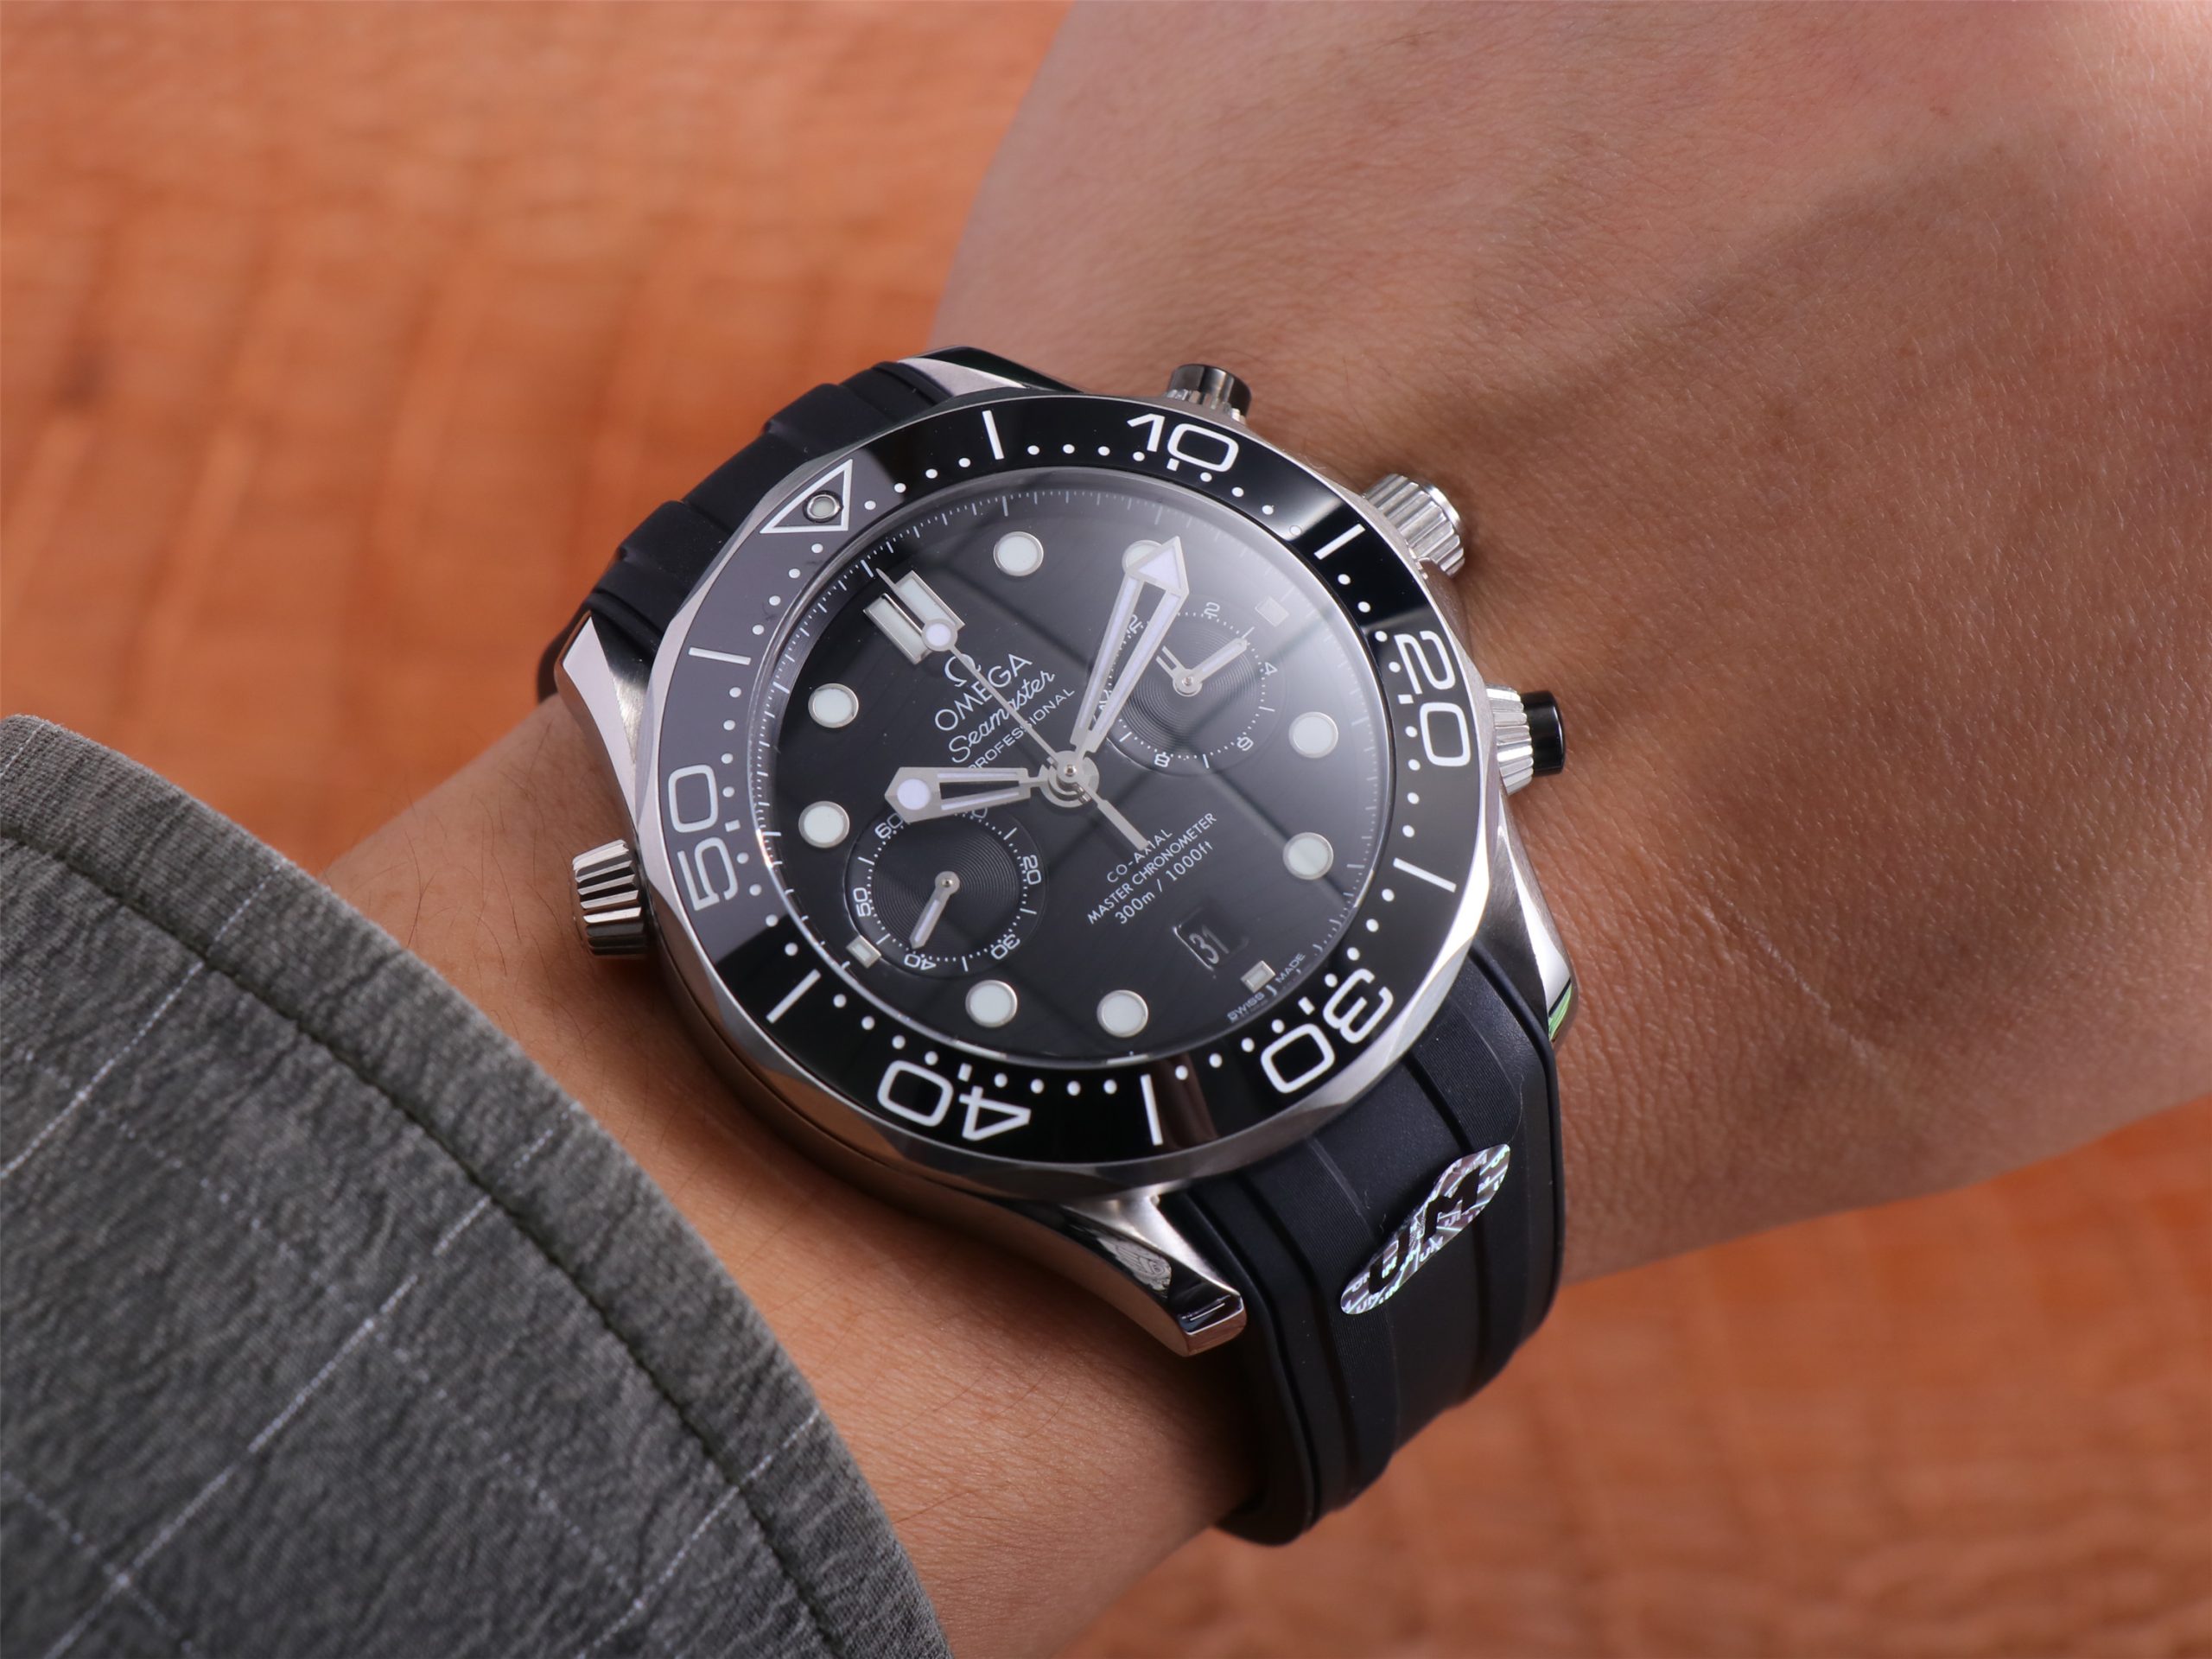 2023042601280632 scaled - 復刻歐米茄新款海馬300m um廠手錶 210.32.44.51.01.001復刻錶￥4680